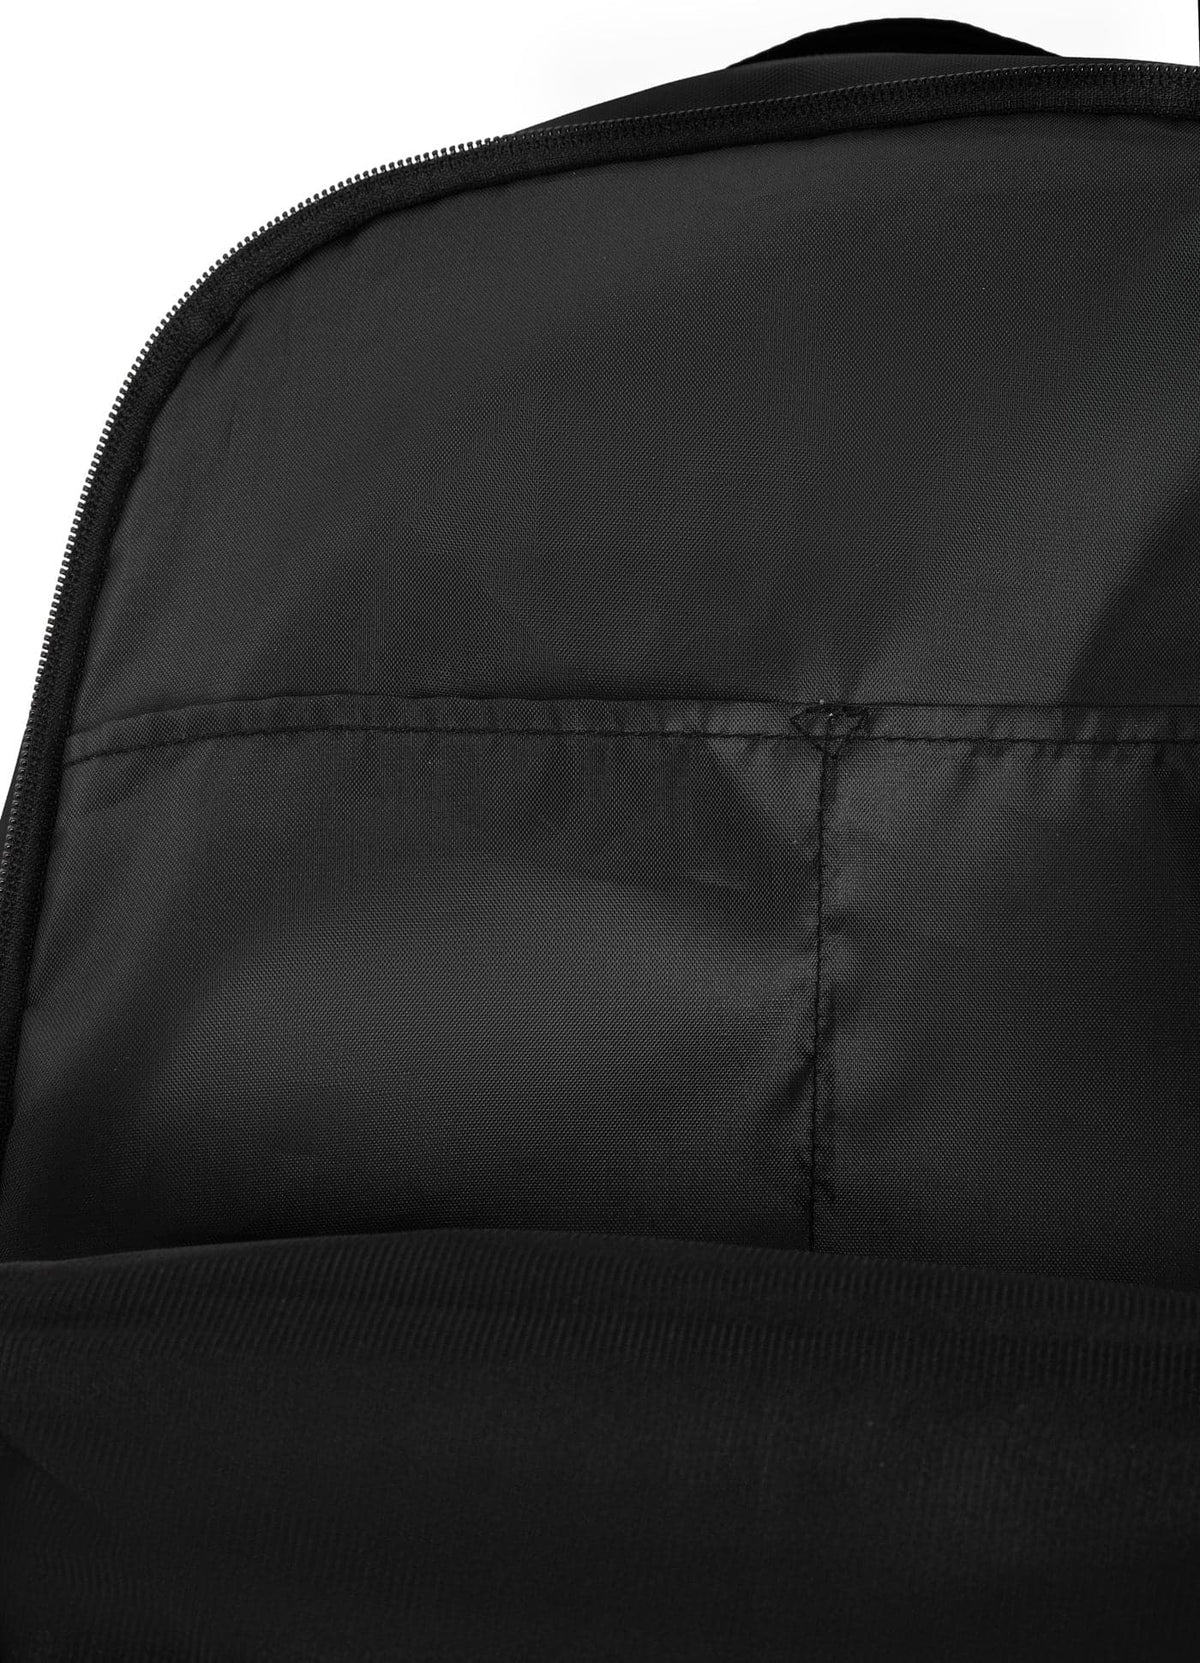 HILLTOP 2 Black Backpack - Pitbullstore.eu